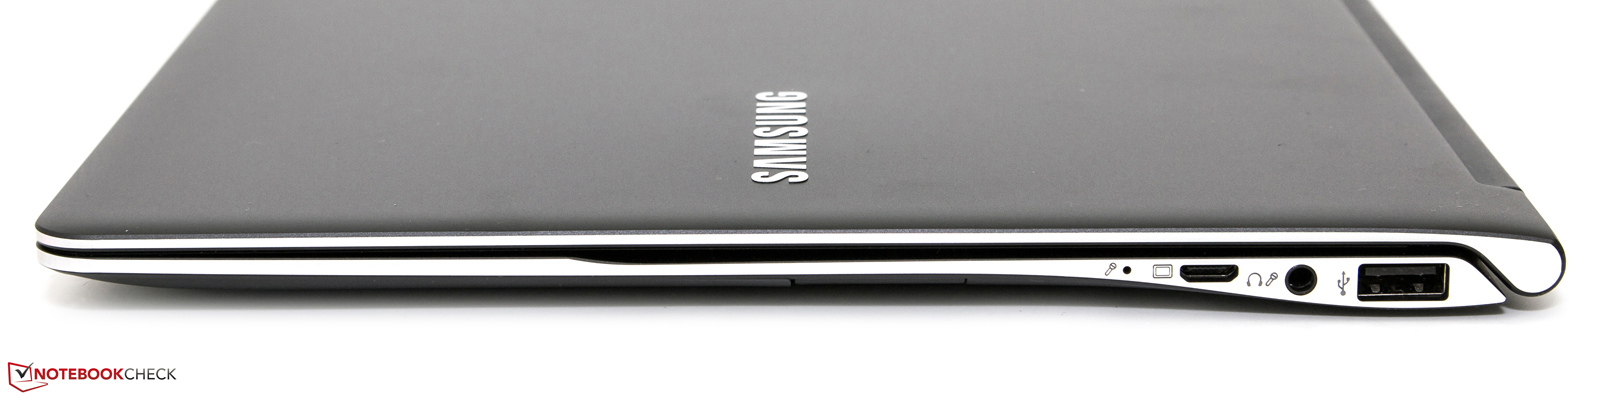 Samsung Series 9 Ultrabook I7 Price